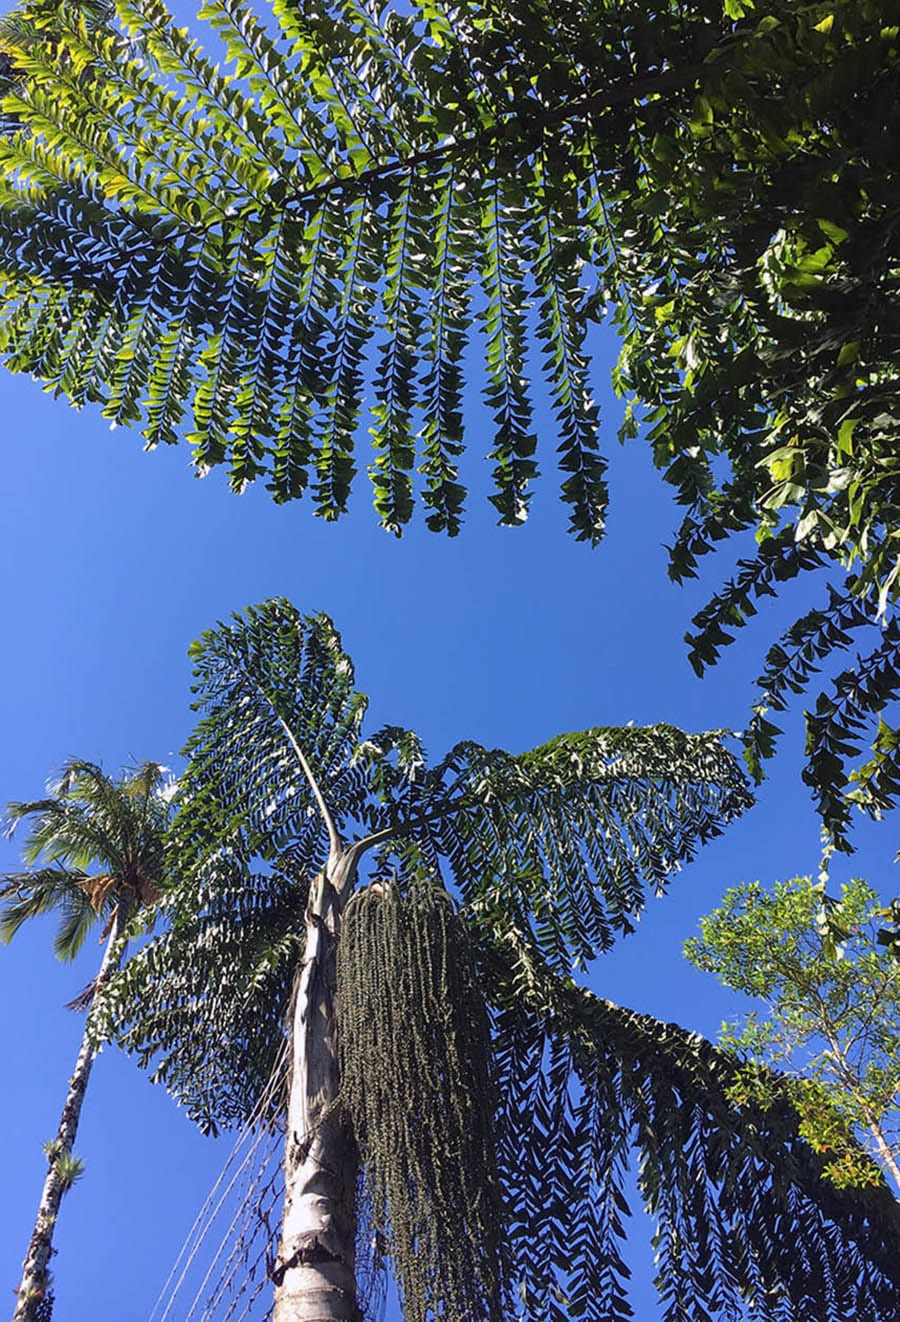 King Kong Palm Trees in Wilson Botanical Garden